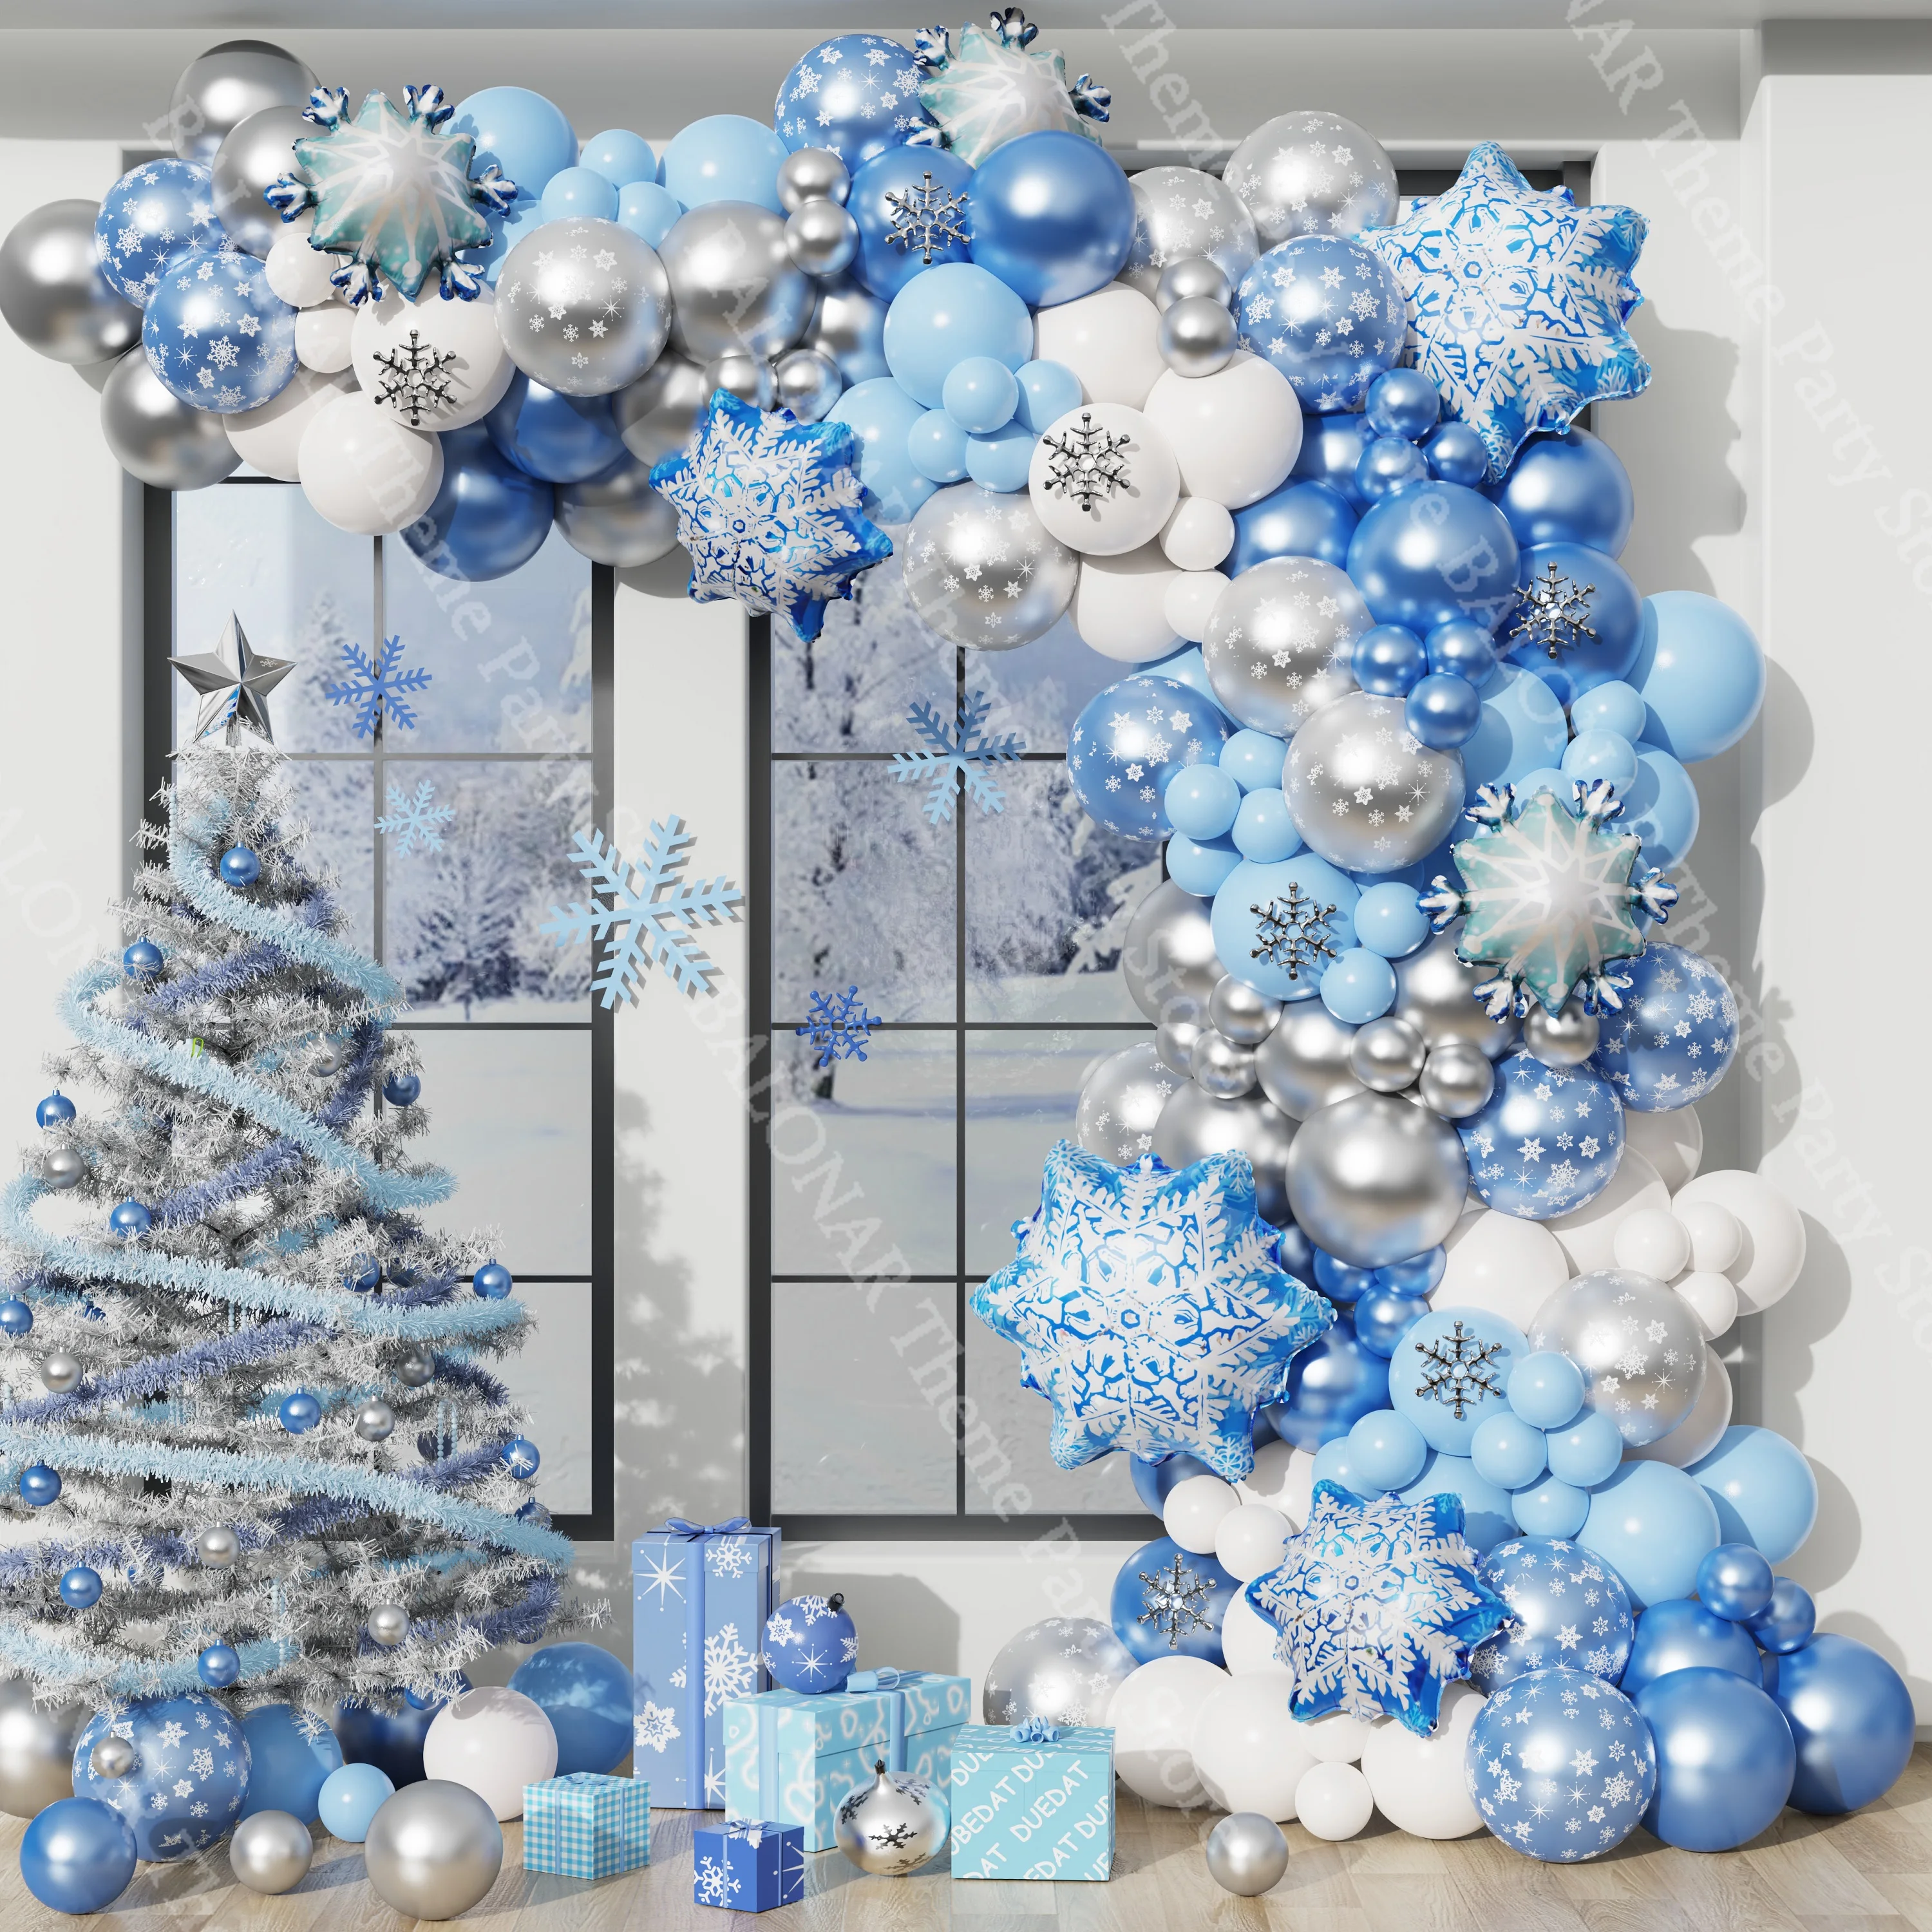 

140pcs Winter Theme Metallic Blue White Snowflake Foil Balloon Garland Frozen New Year Ice Christmas Outdoor Party Decoration Su